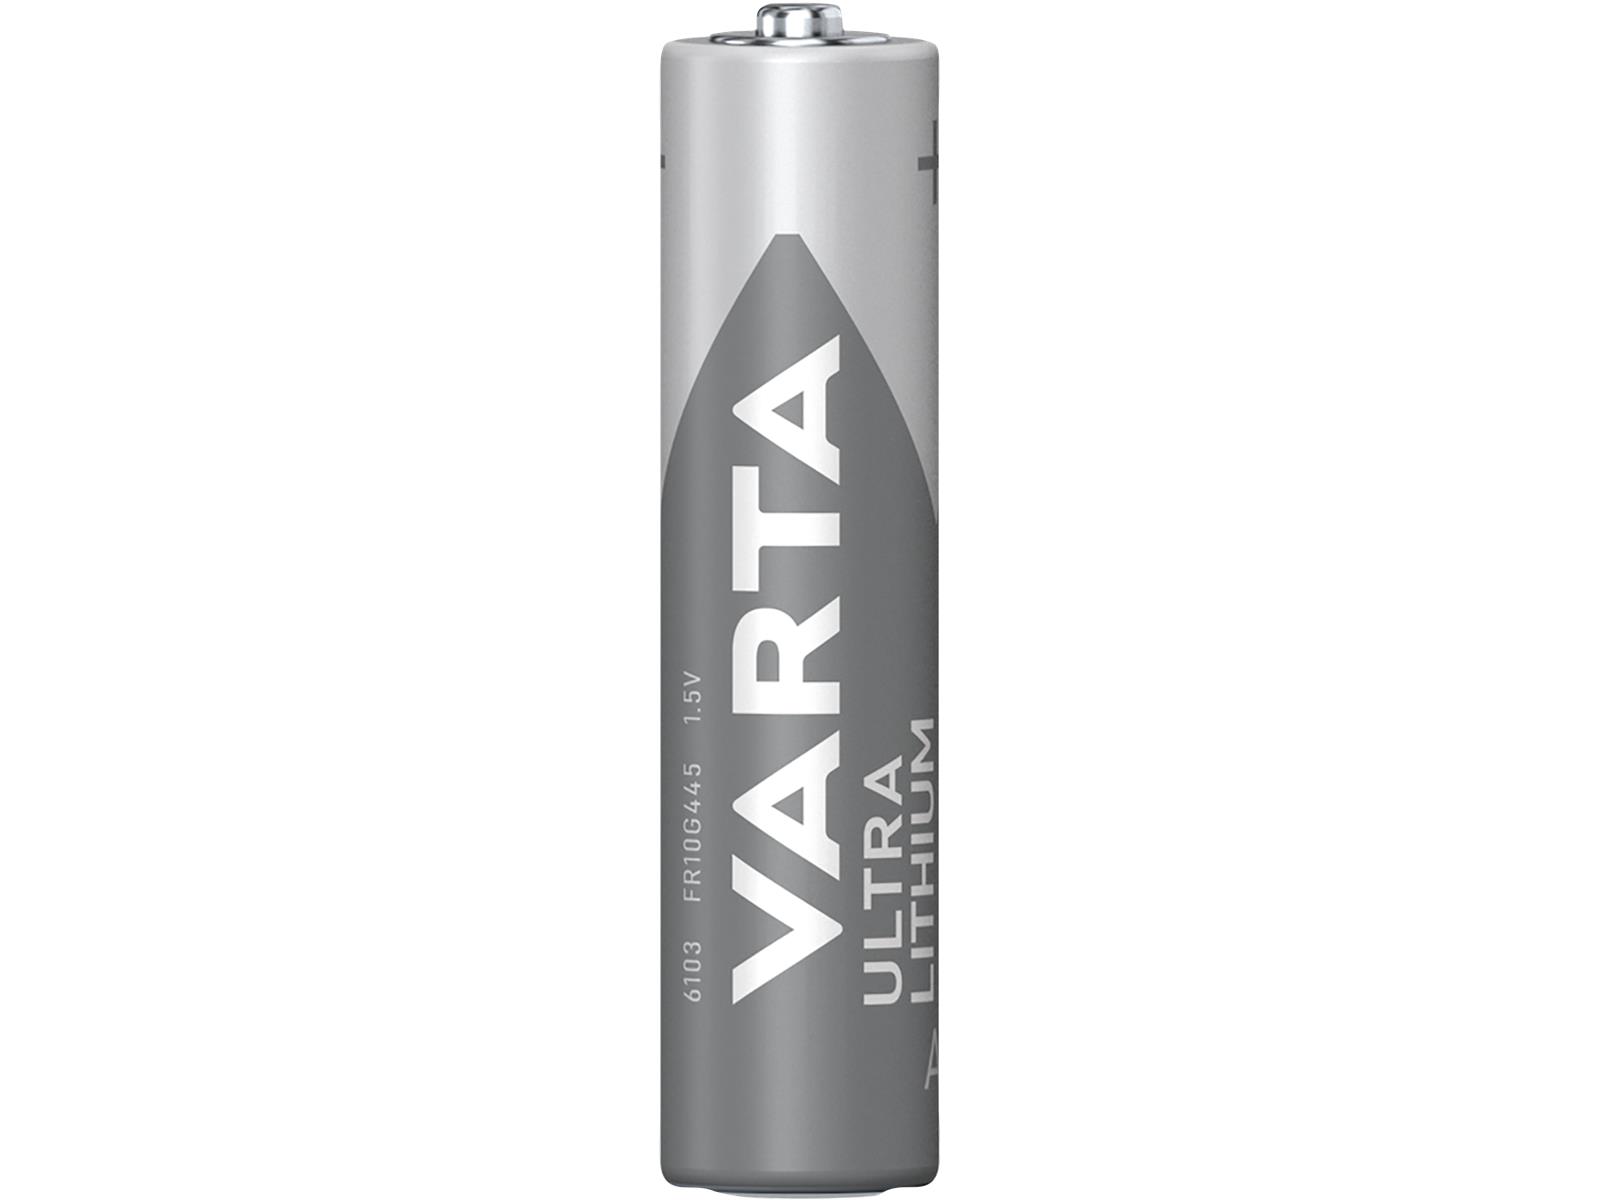 Micro-Batterie VARTA Professional Lithium, Typ AAA/6103, 4er-Blister